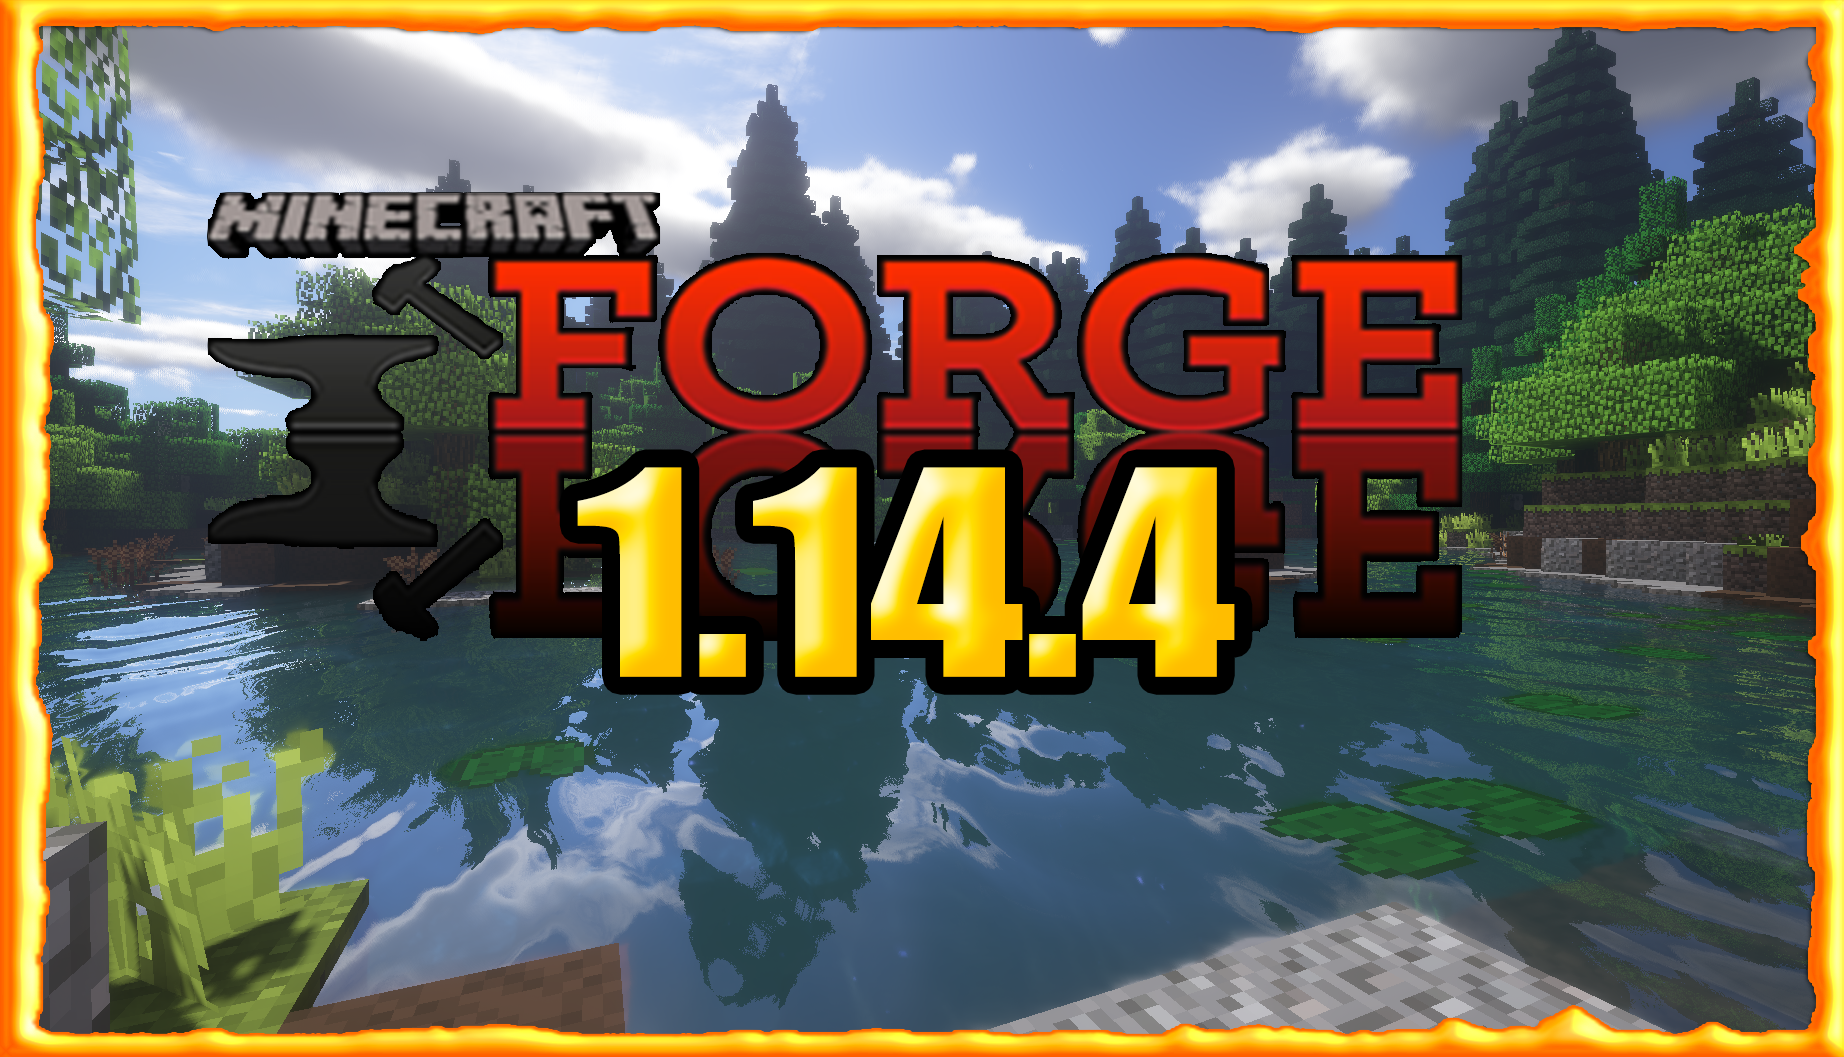 Curse forge 1.20 1. Фордж 1.14.4. Новая версия Forge. Обложка Curse Forge. Сайт Forge майнкрафт взломали.